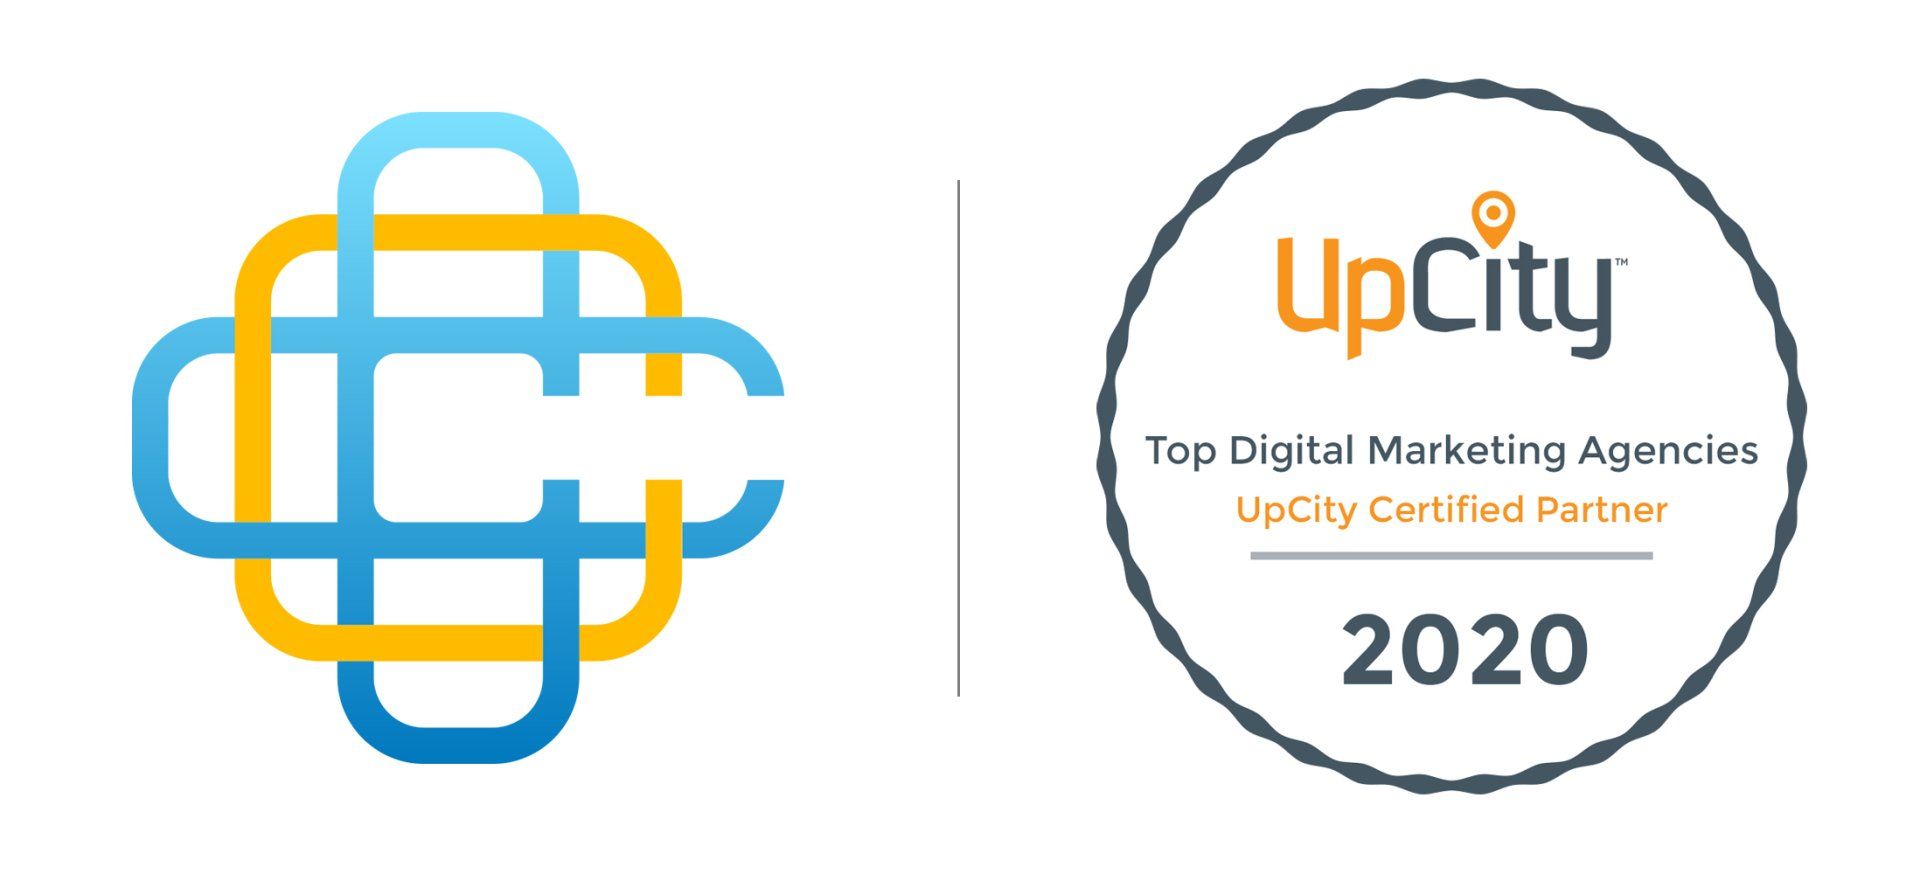 Upcity Top Digital Marketing Agency Certified Partner